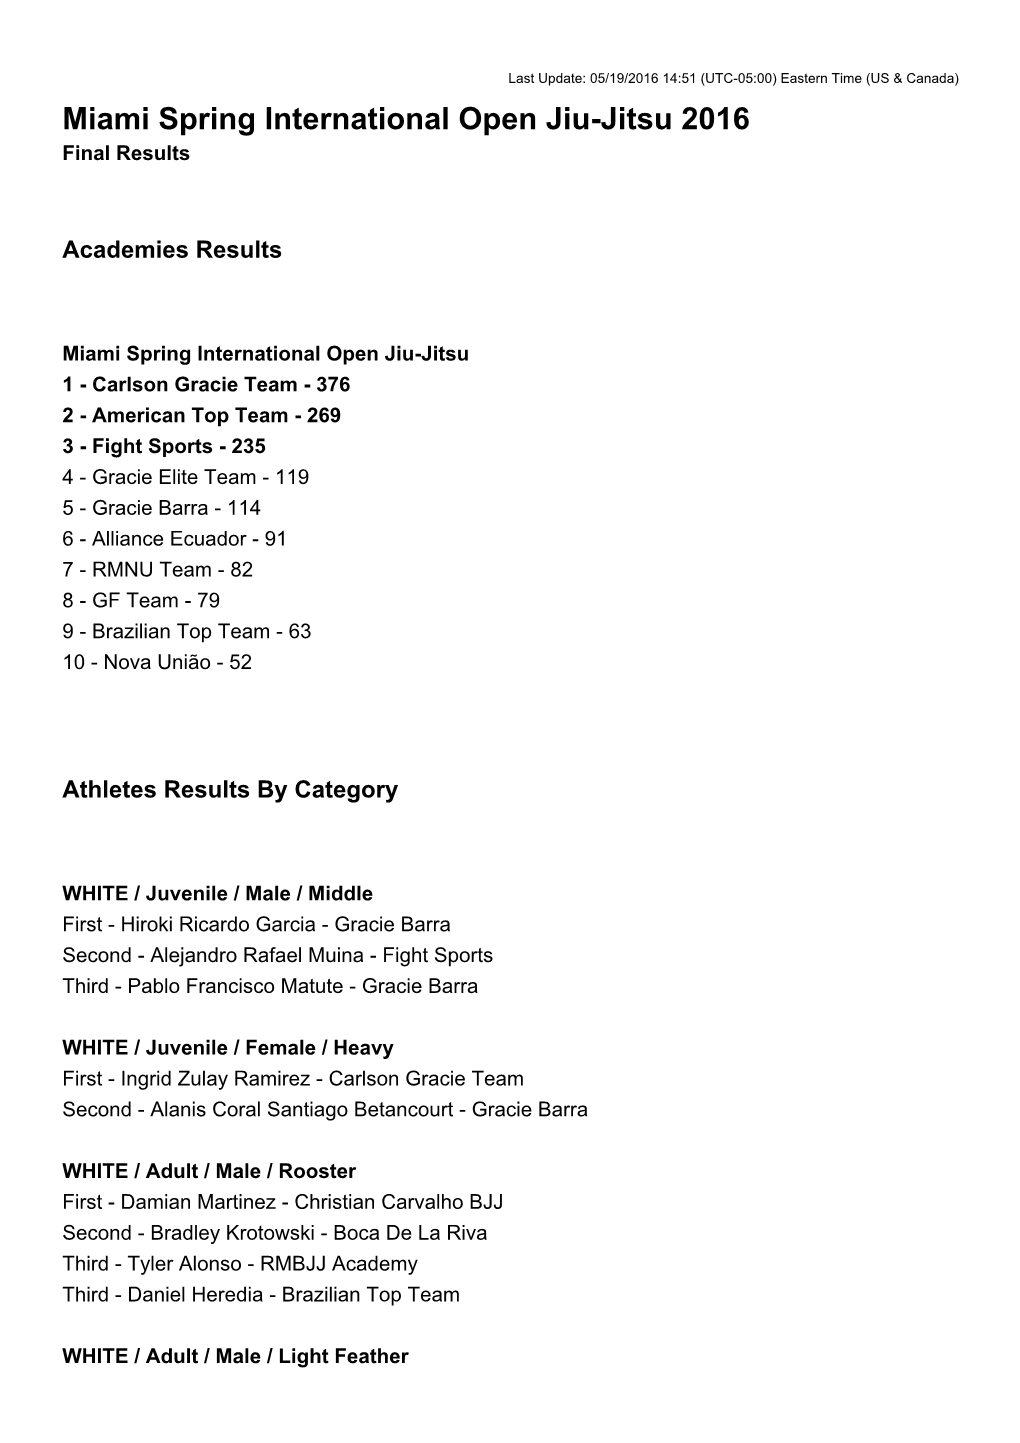 Miami Spring International Open Jiu-Jitsu 2016 Final Results